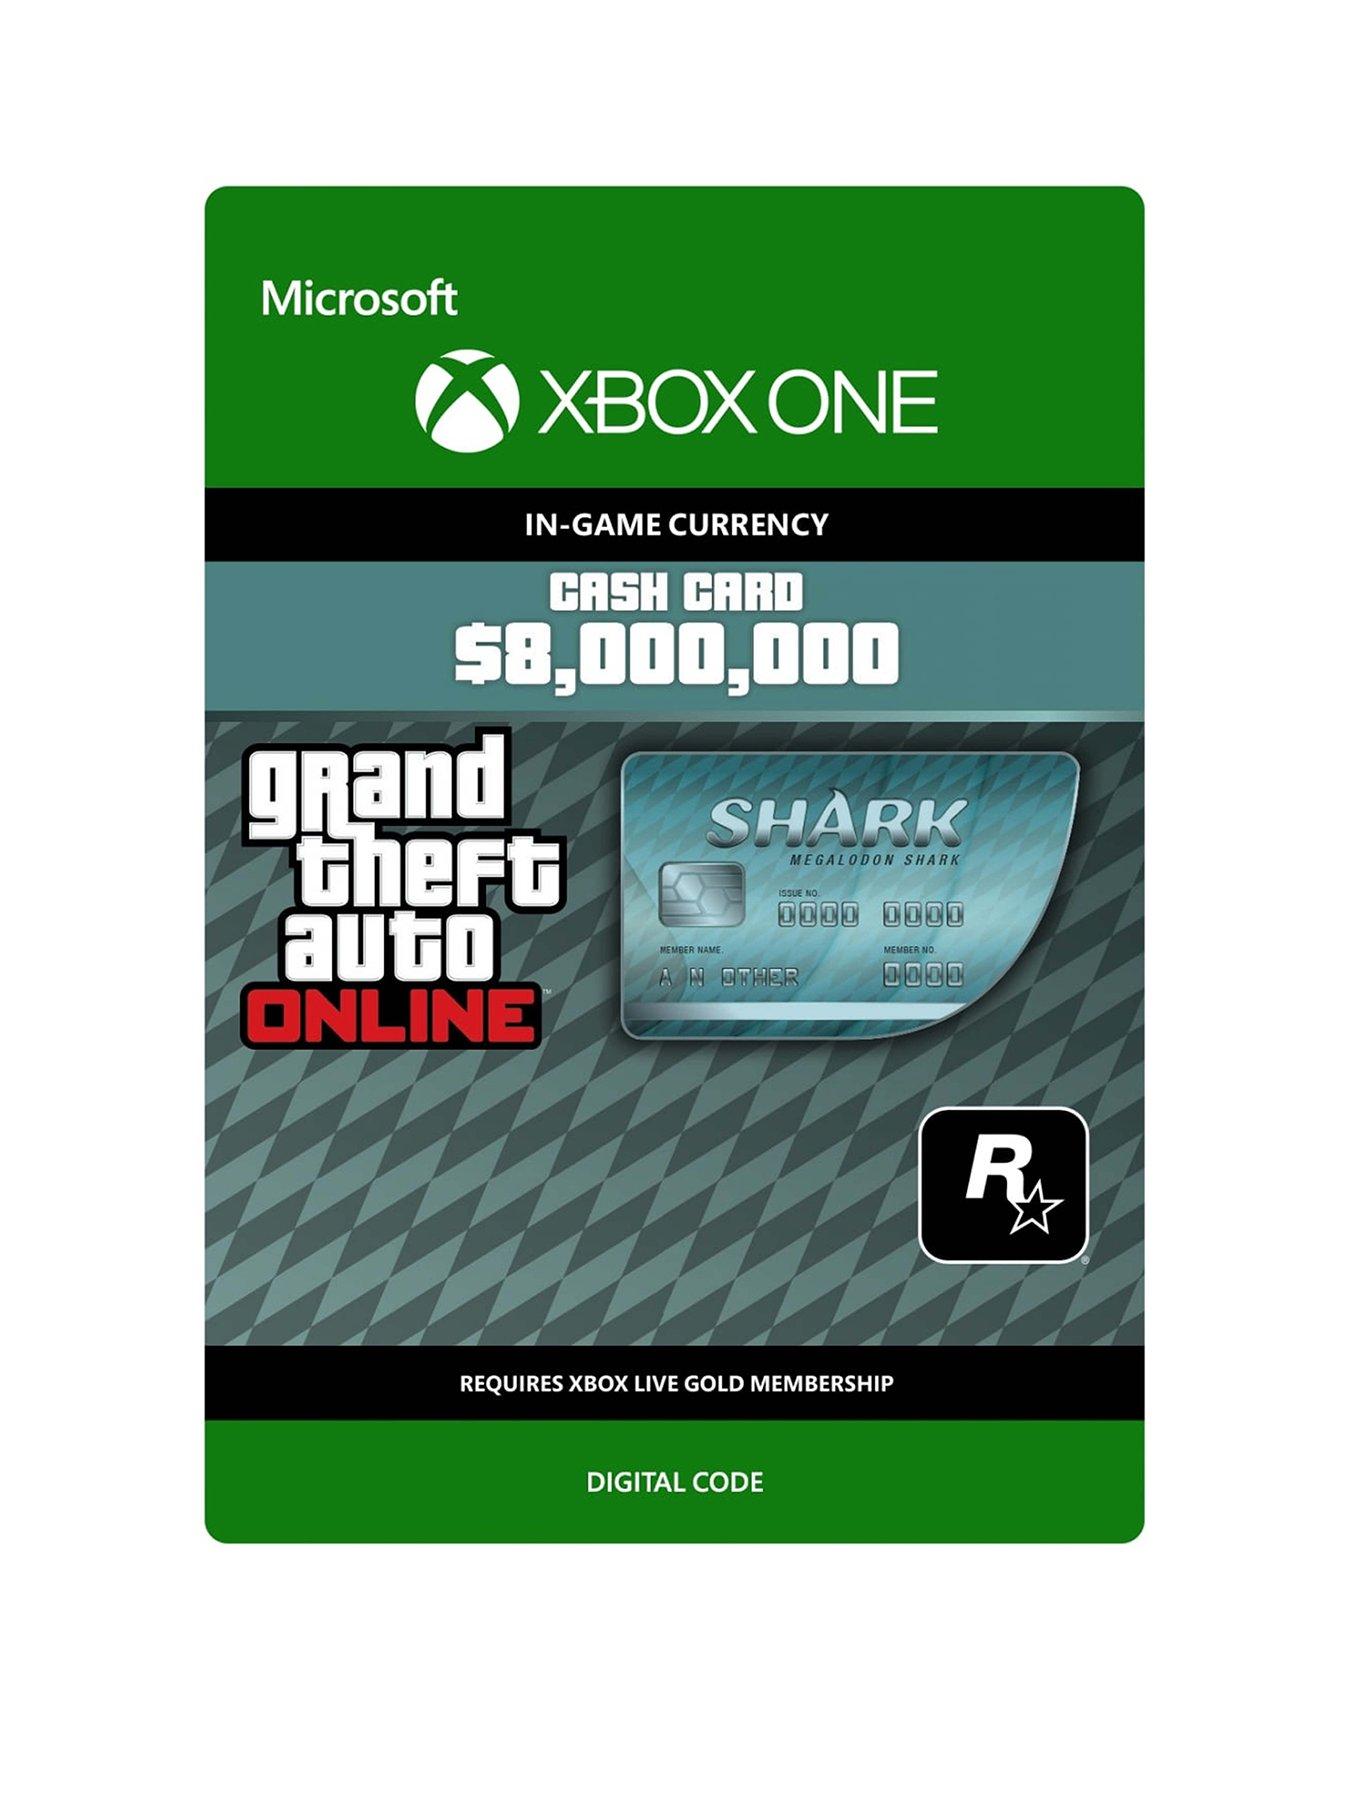 GTA 5 Xbox 360 Version Full Game Setup Free Download - Hut Mobile